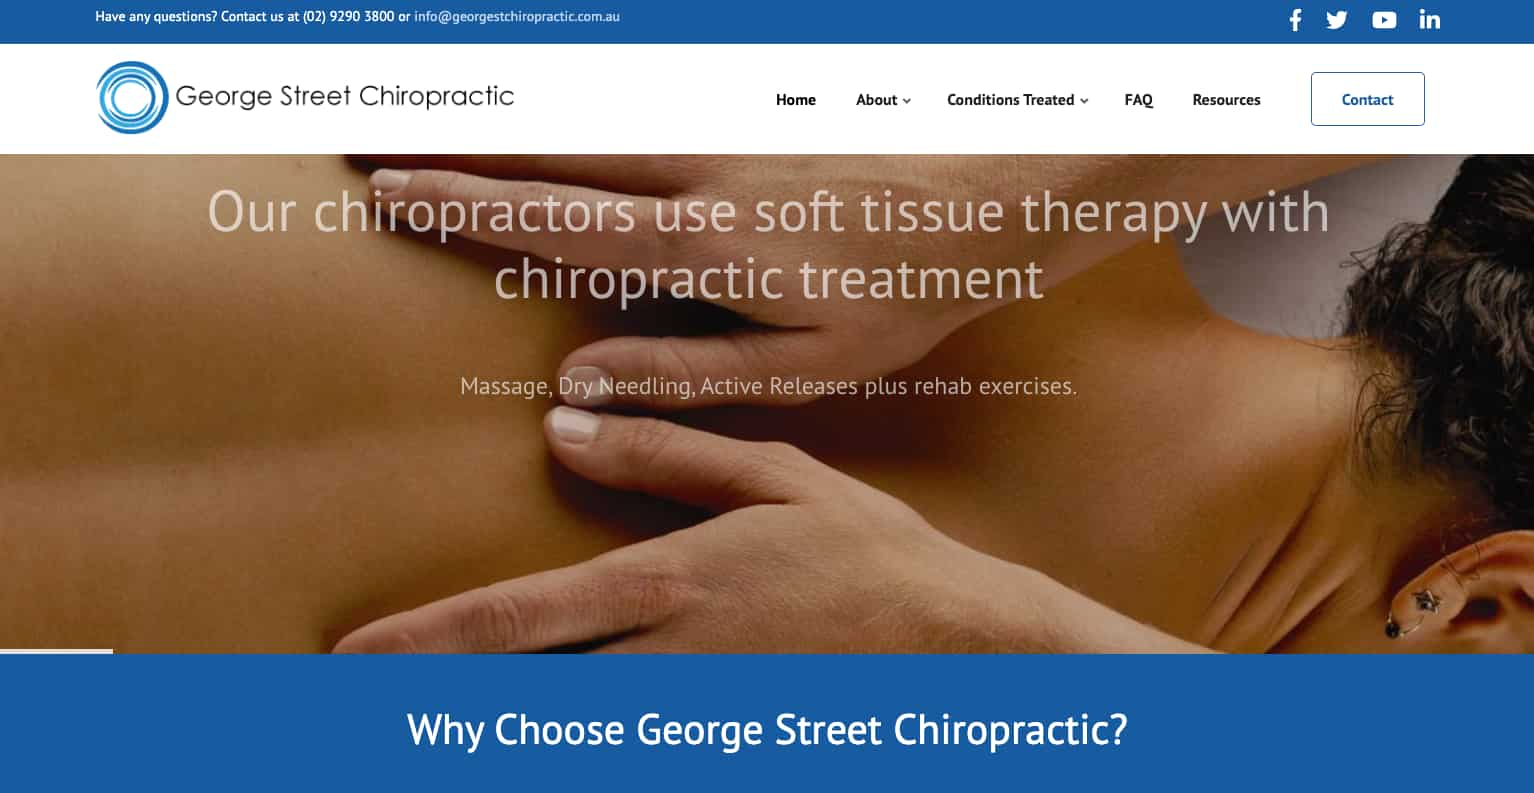 George Street Chiropractic